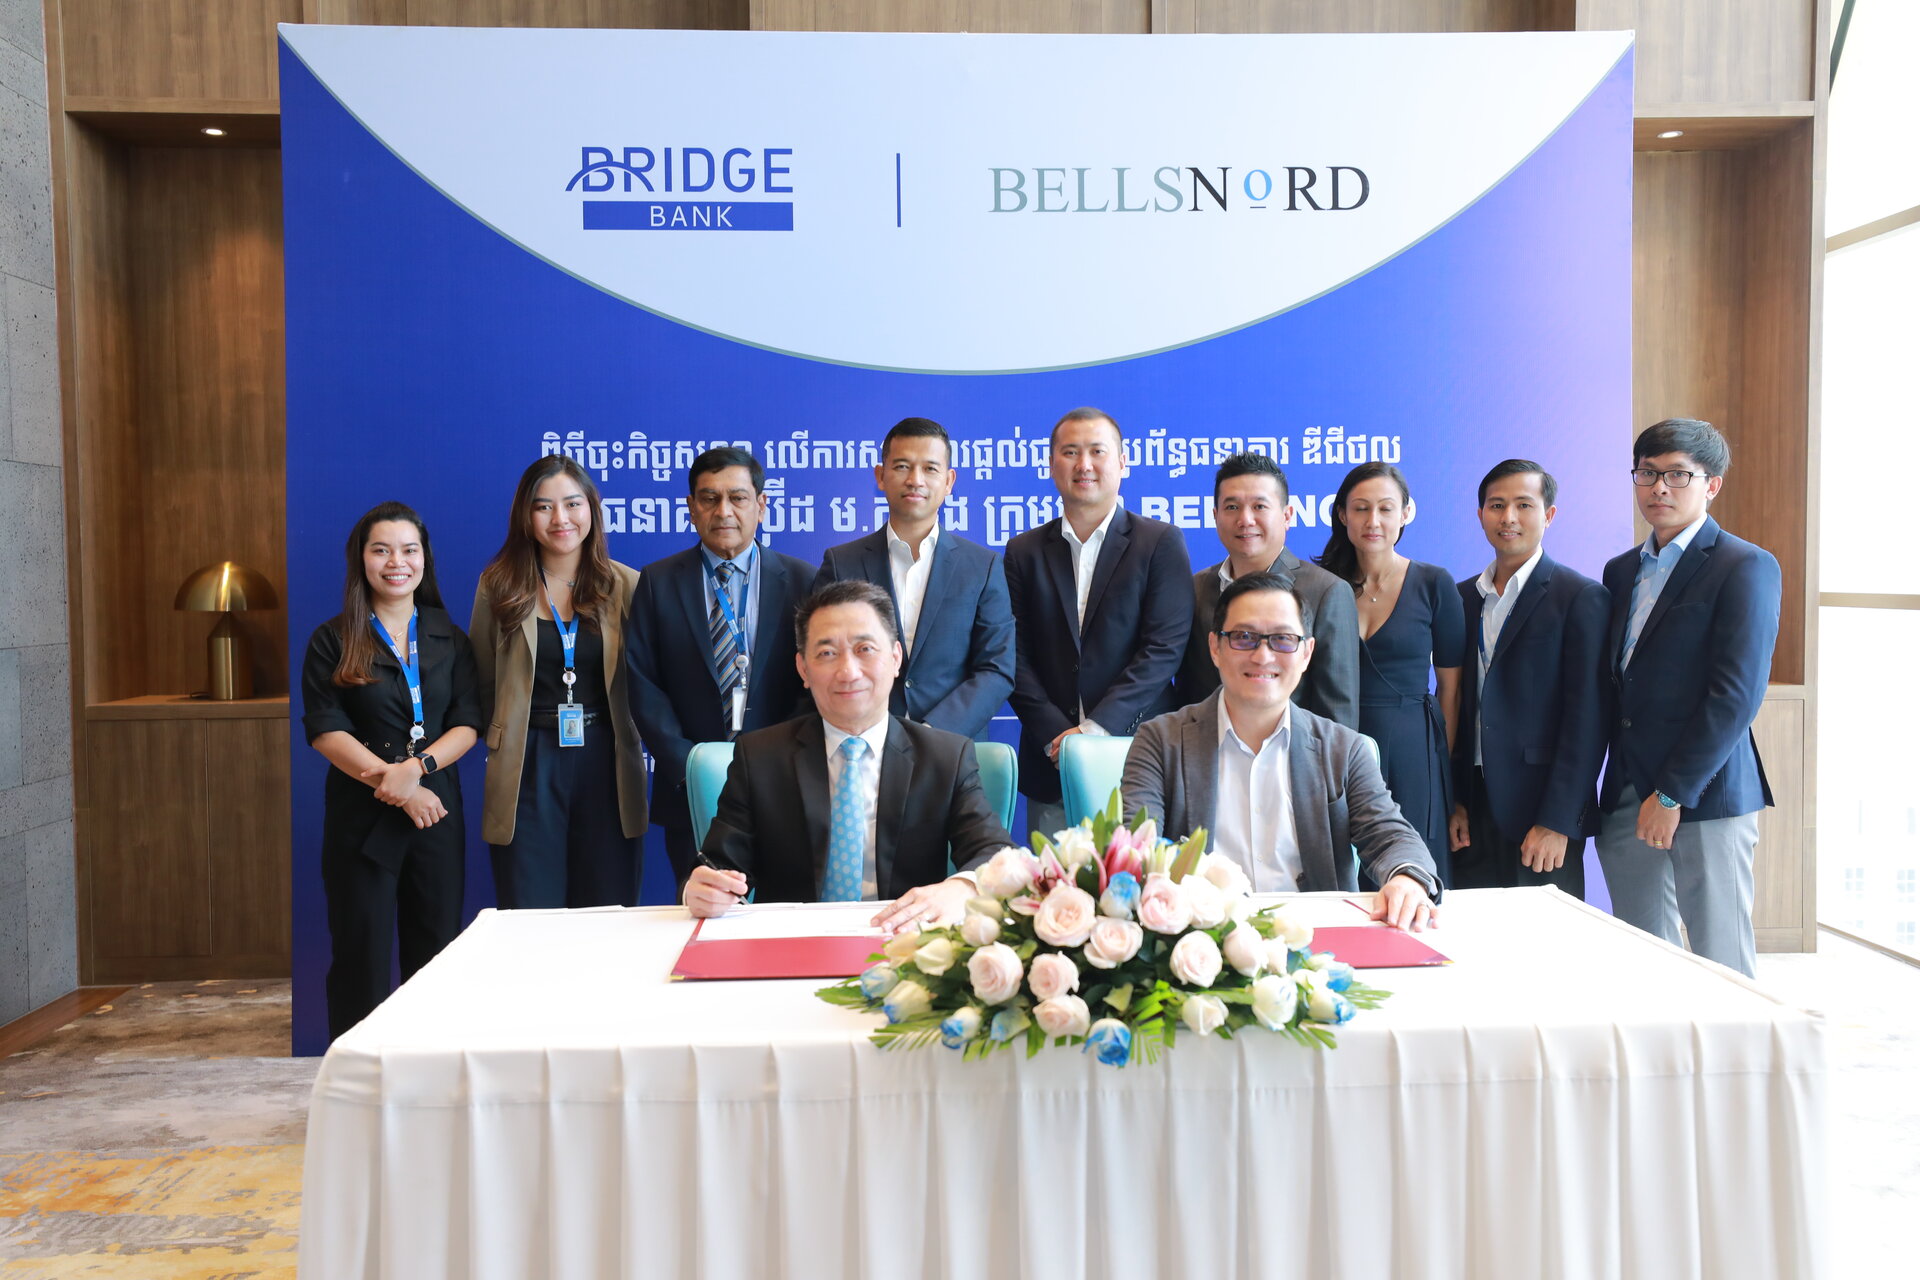 Bellsnord joins Bridge Bank’s digital transformation